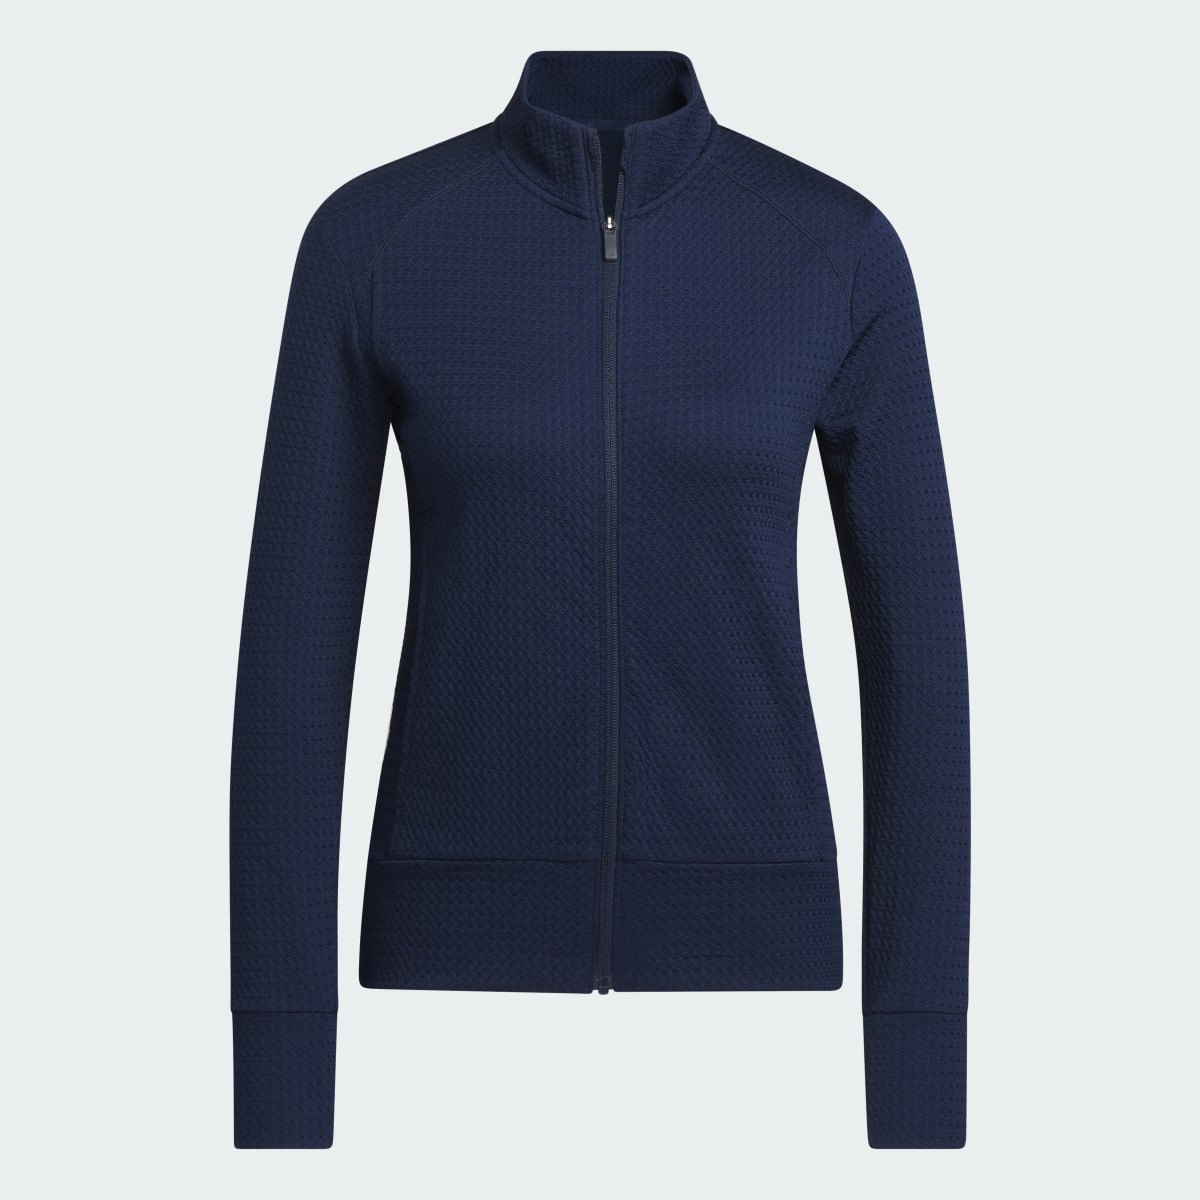 Adidas Women's Ultimate365 Textured Jacket. 5